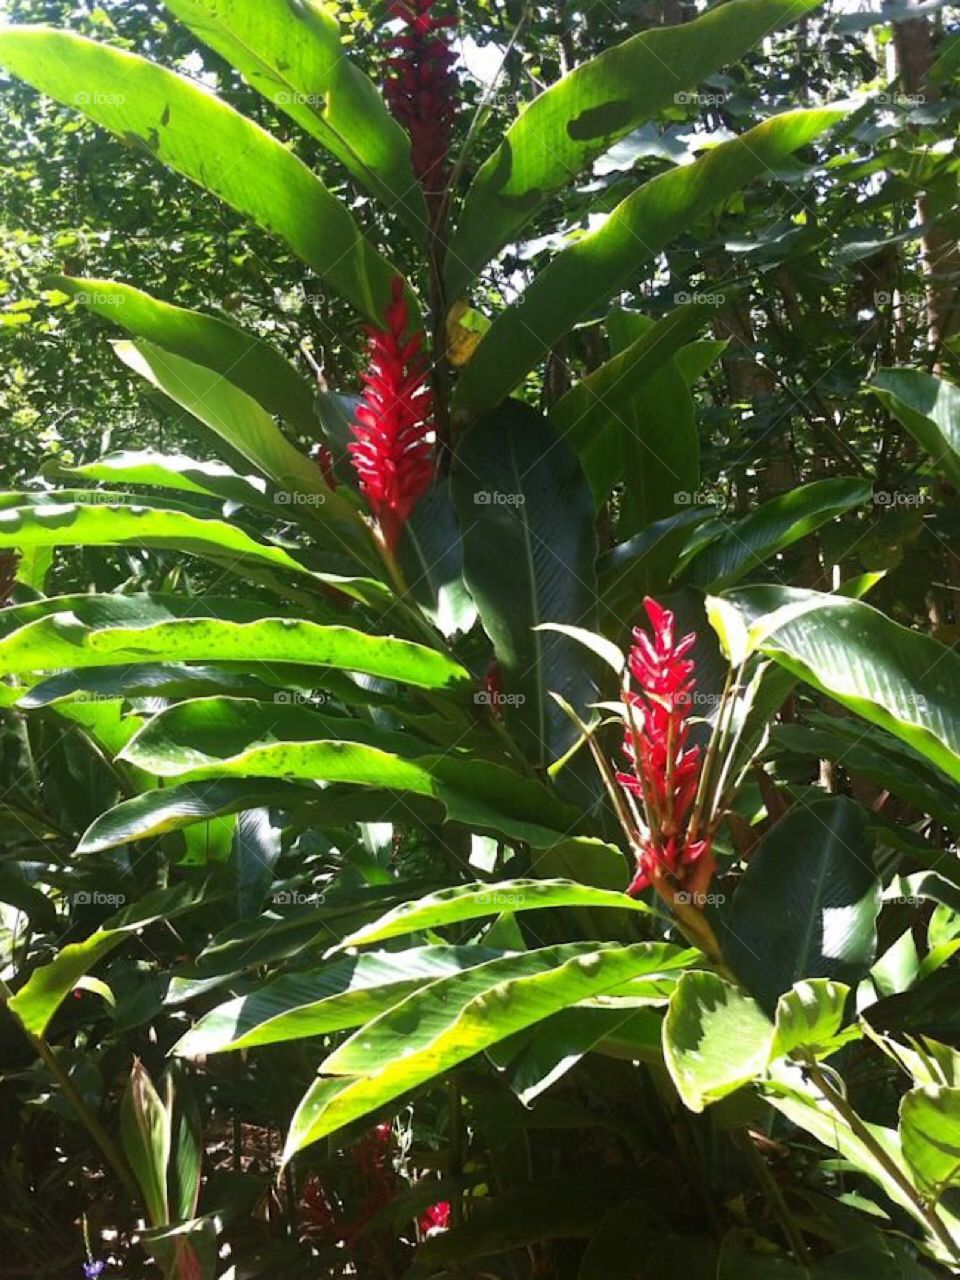 Red Hawaiian plant in Hawaii. Dole plantation farm.